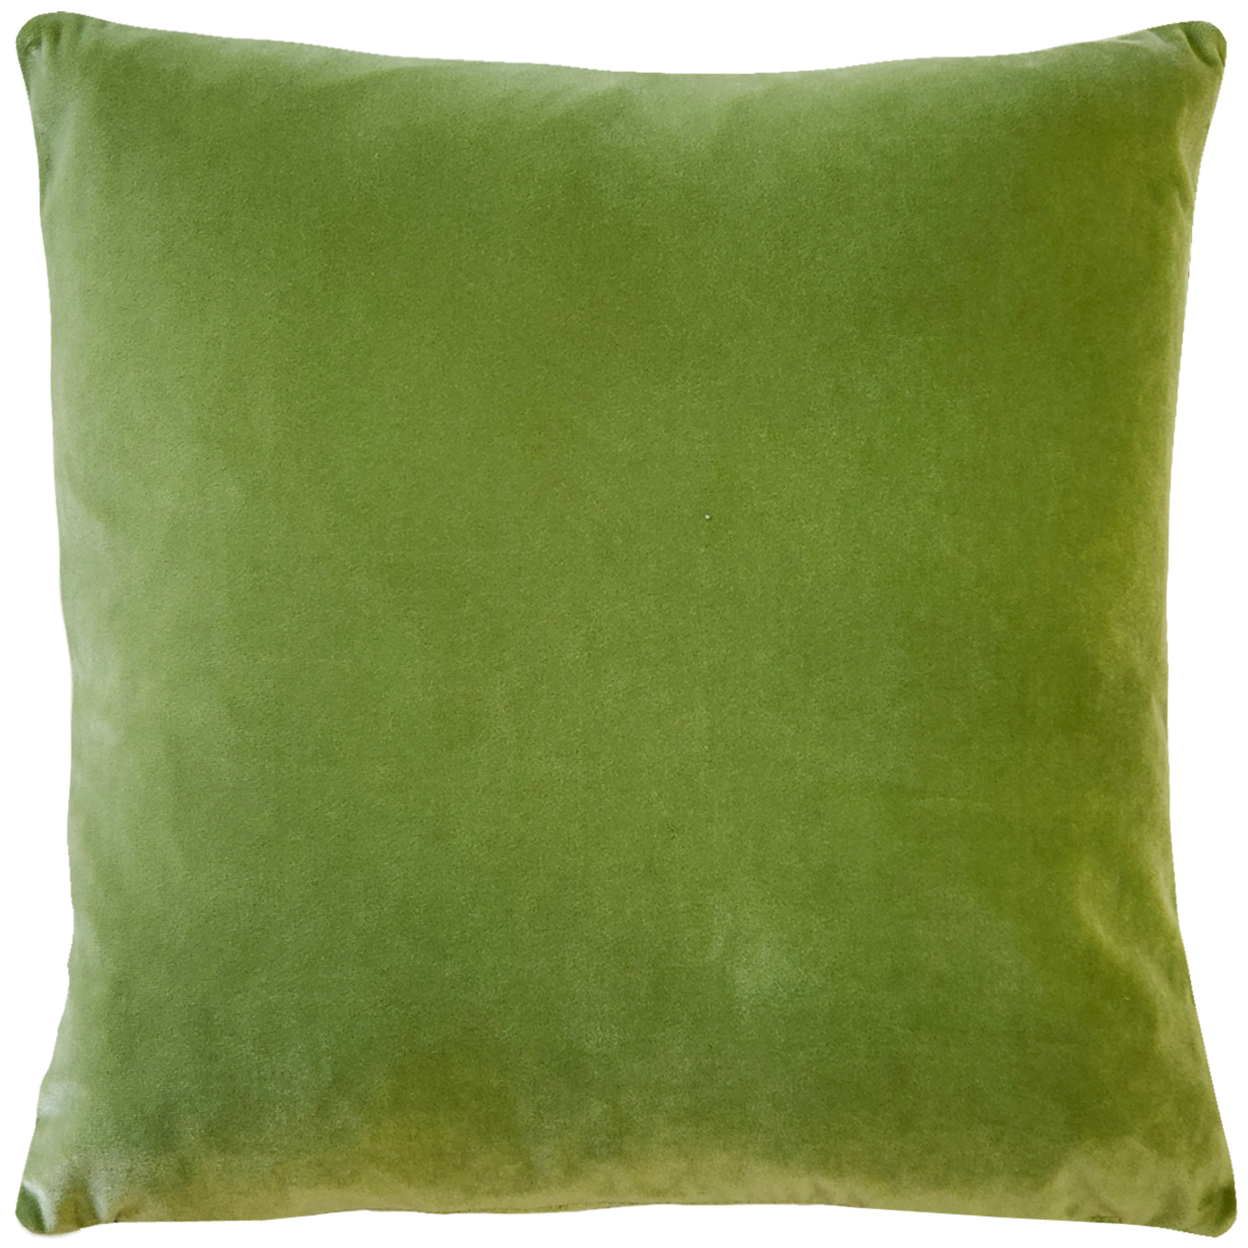 Castello Velvet Throw Pillows, Complete Pillow with Polyfill Pillow Insert (18 Colors, 3 Sizes) - summer green, 20x20